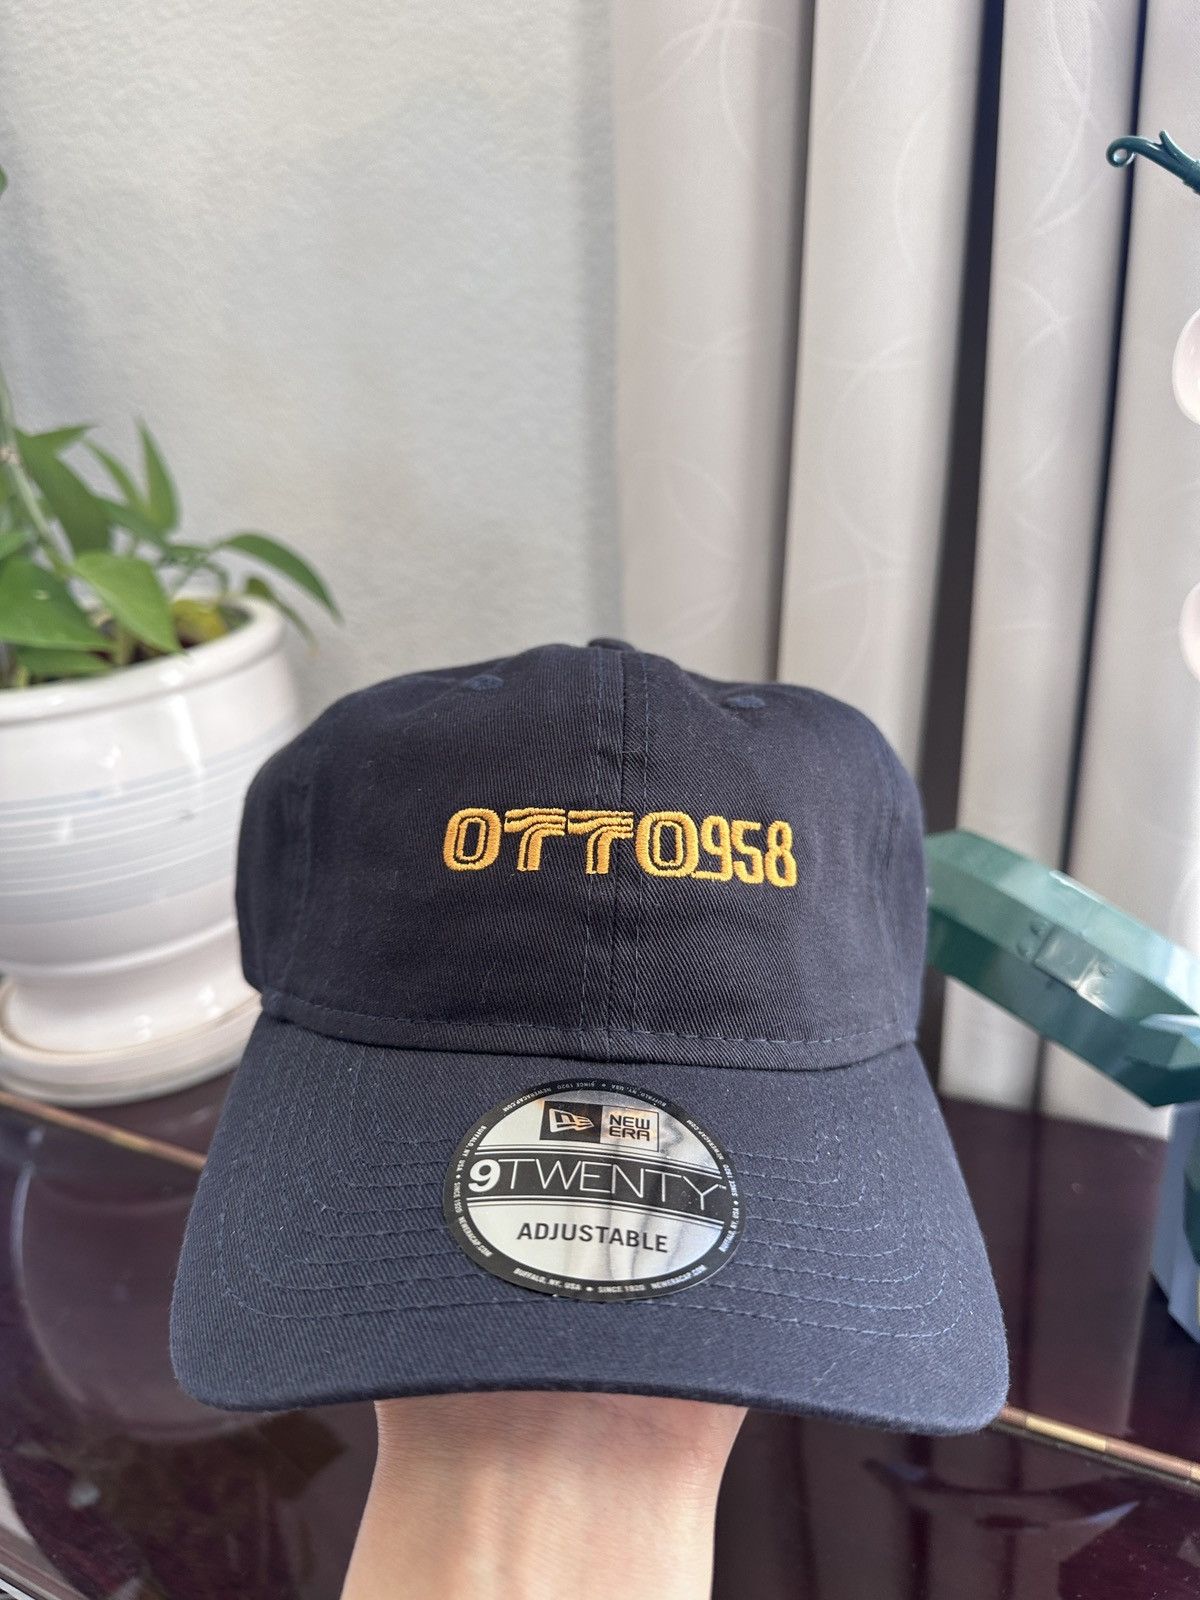 Otto 958 x Fifth store コラボキャップ - 帽子